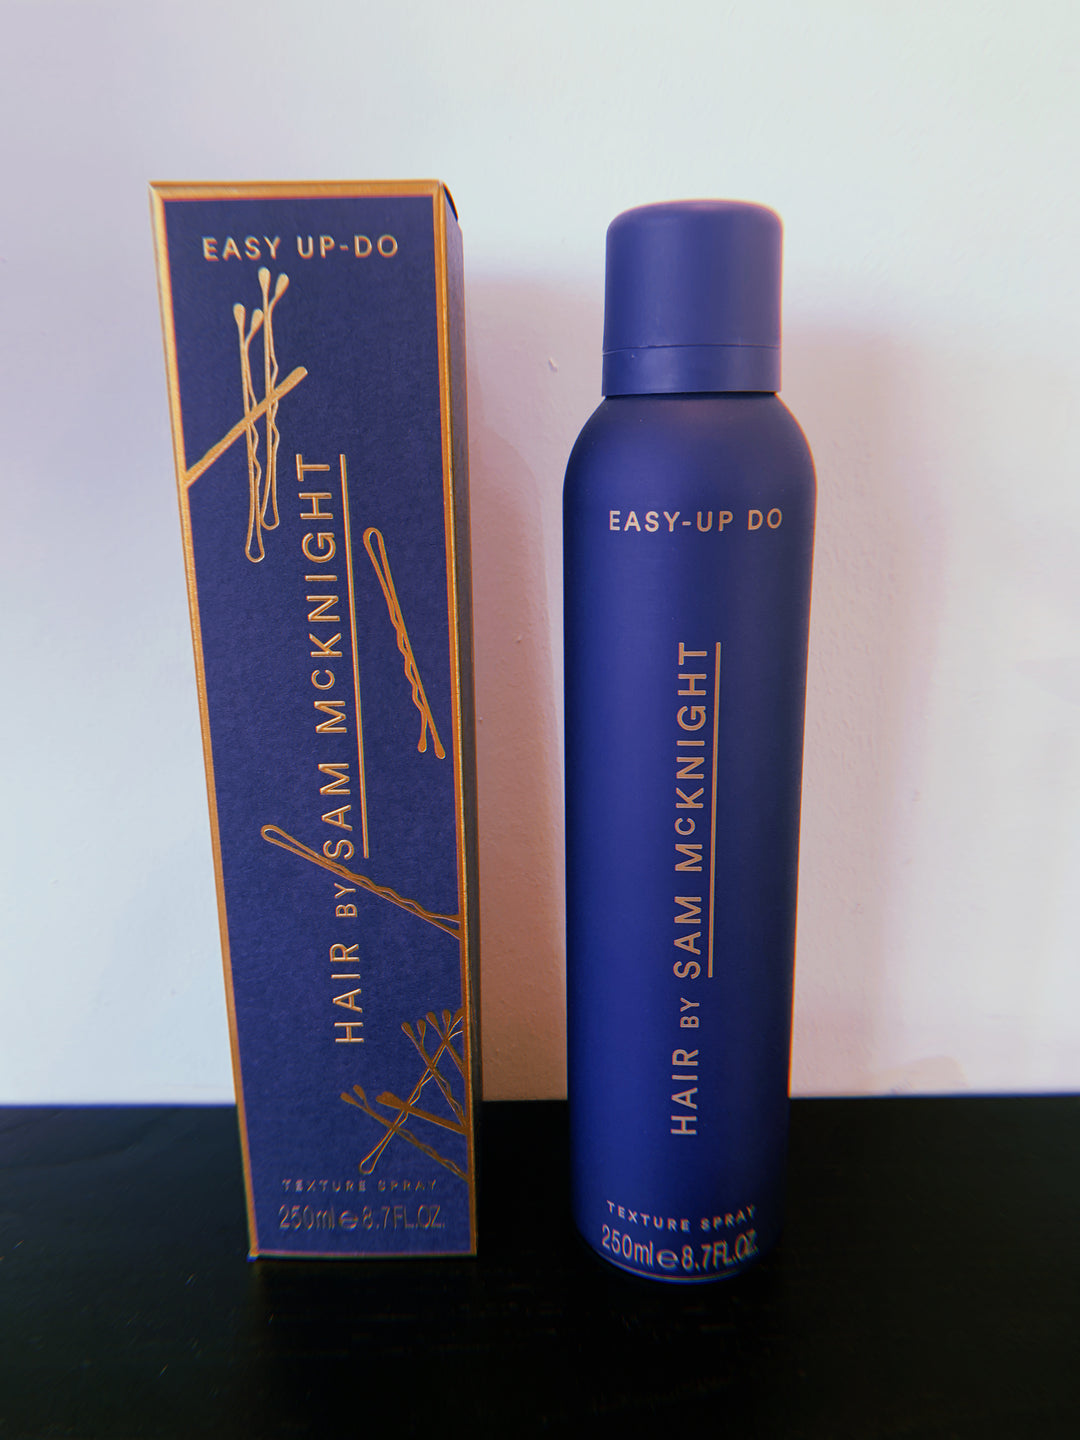 Twentyseven Toronto - Hair by Sam McKnight Easy Up-Do Texture Spray - Full Size (250ml)